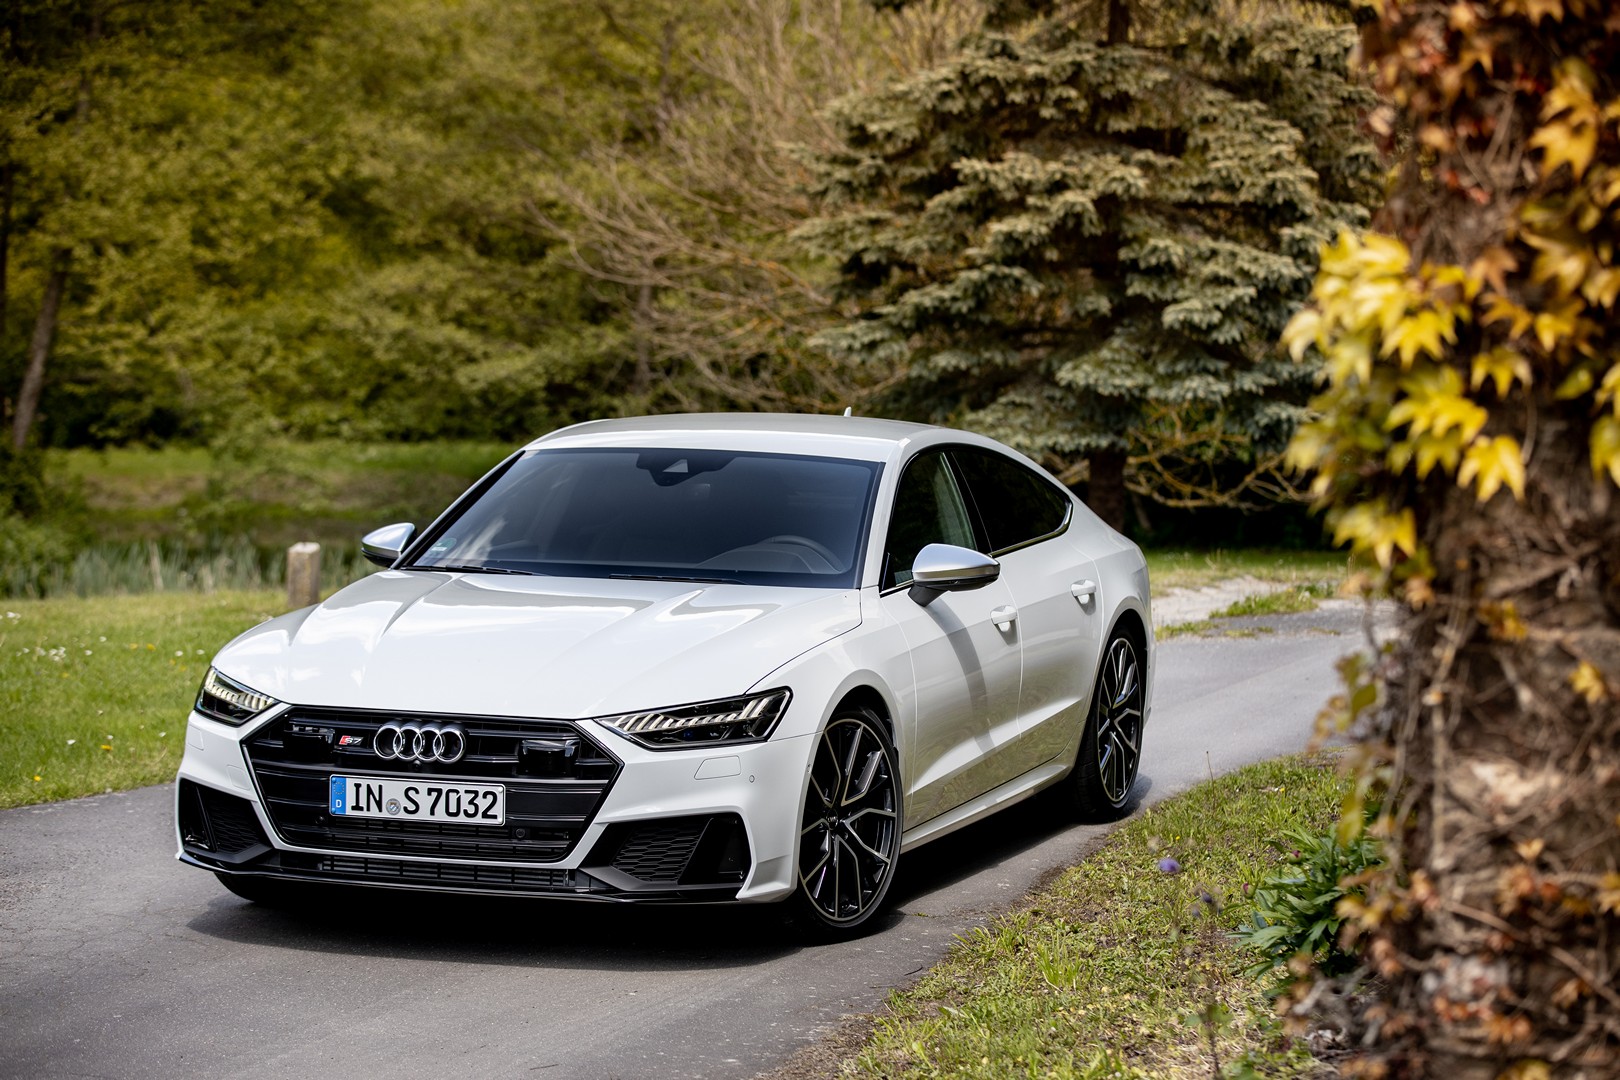 2020 Audi S7 Looks Stunning in Glacier White With Black Trim - autoevolution